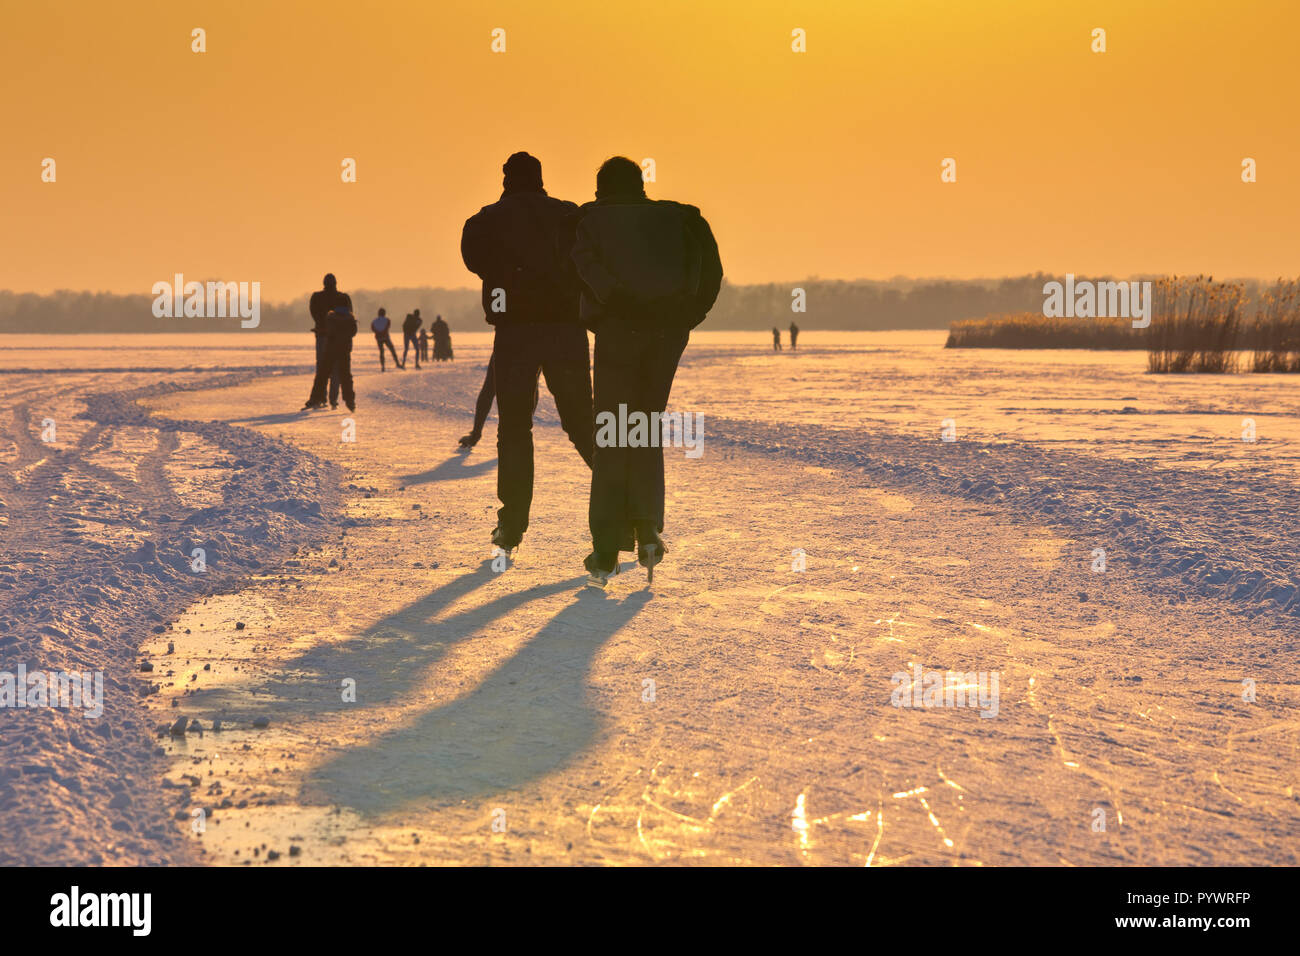 Ice Skaters on frozen lake seen on their back under orange setting sun Stock Photo